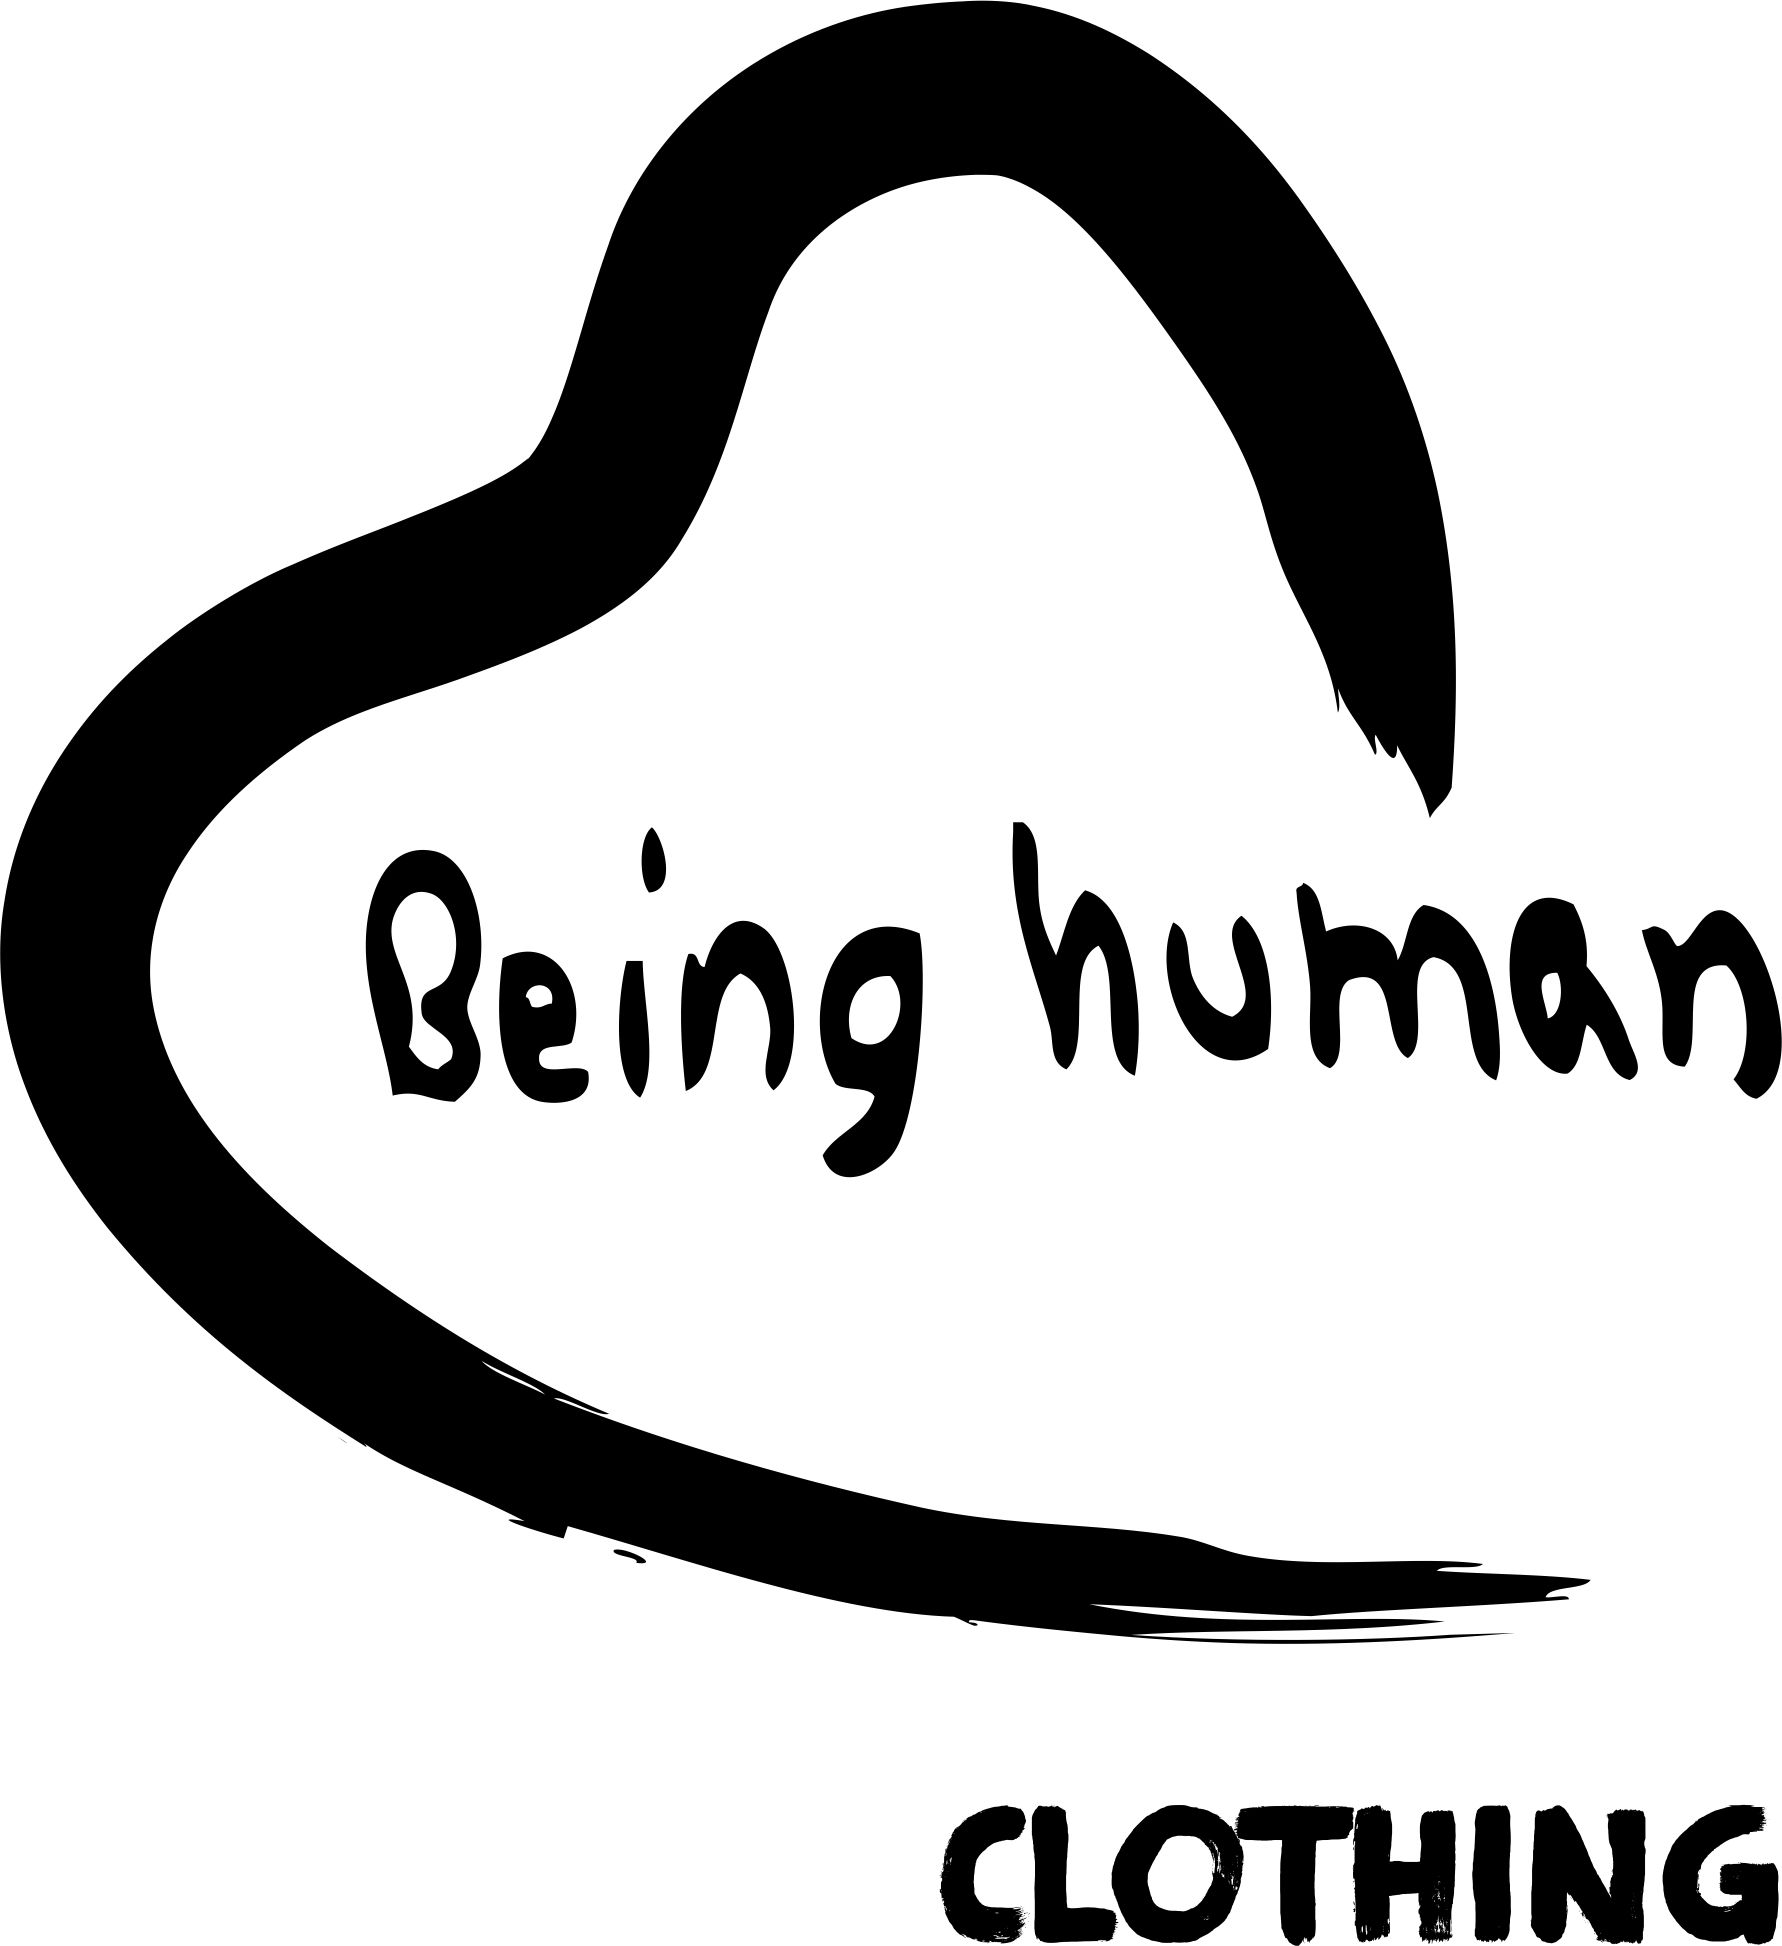 Human written. Humans logo. Being логотип. Being Human Clothing. Human being косметика.